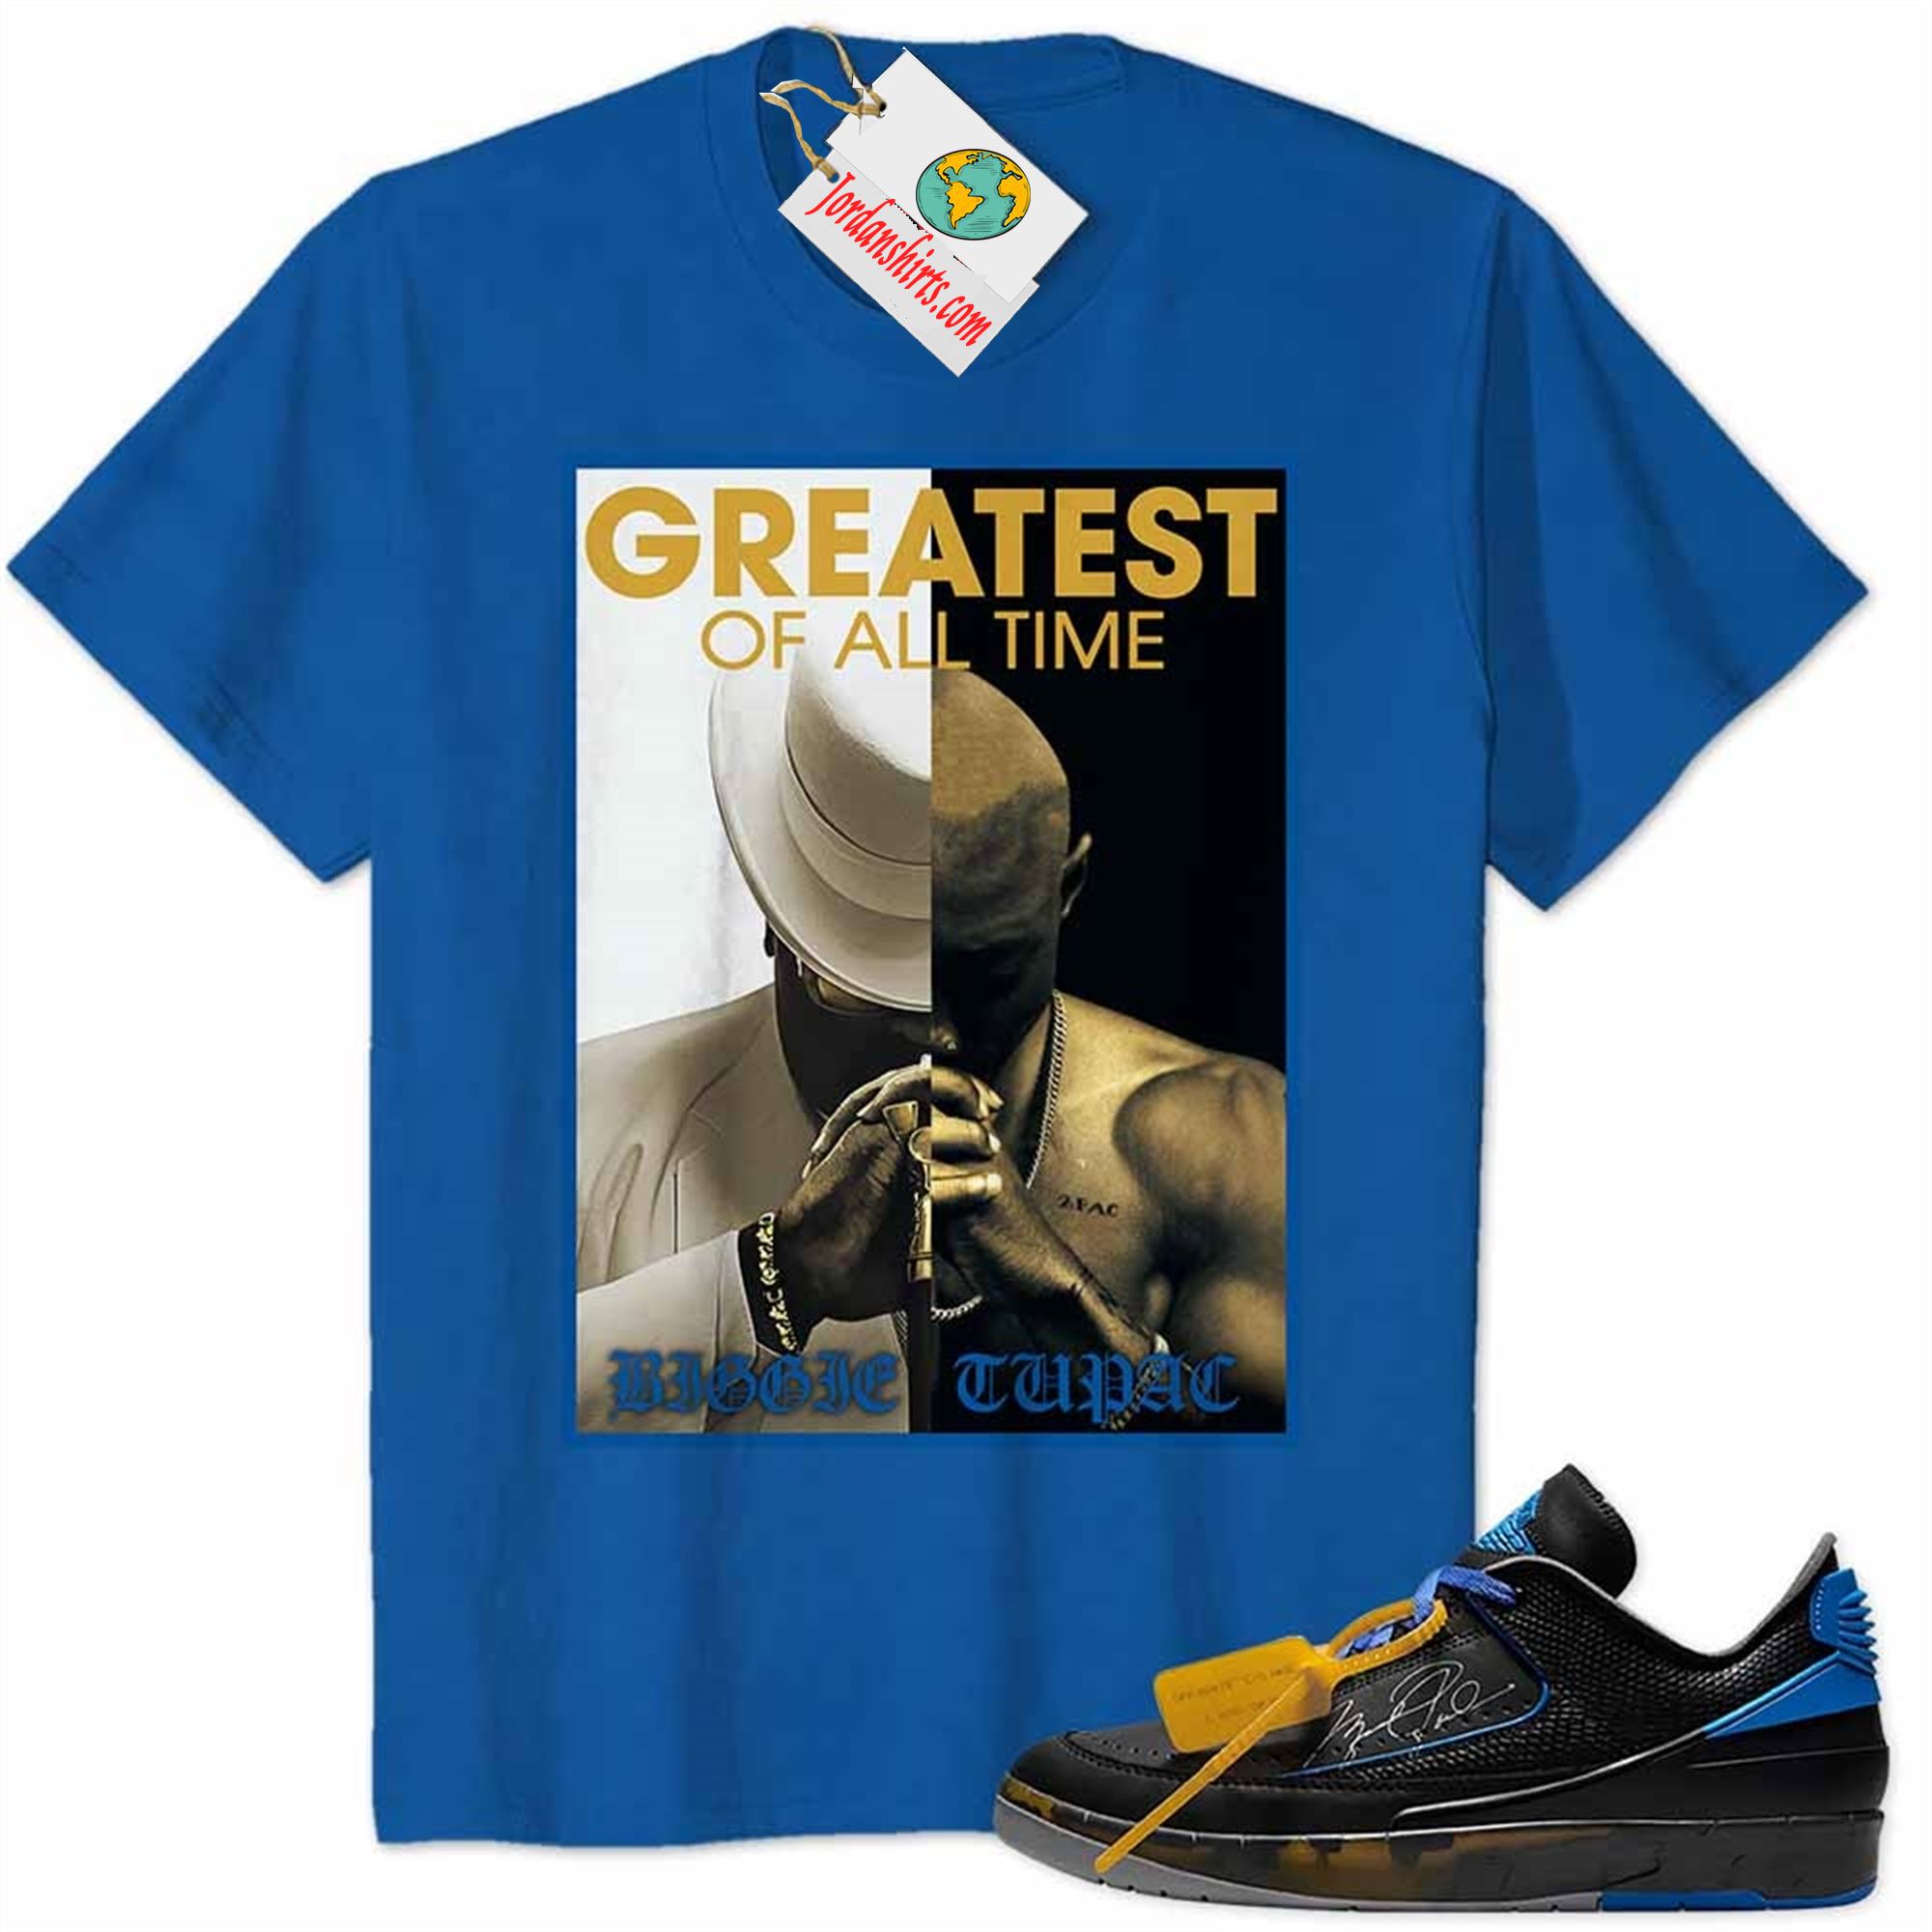 Jordan 2 Shirt, Tupac Shakur Notorious Big Biggie 2pac Greatest Of All Time Blue Air Jordan 2 Low X Off-white Black And Varsity Royal 2s Plus Size Up To 5xl